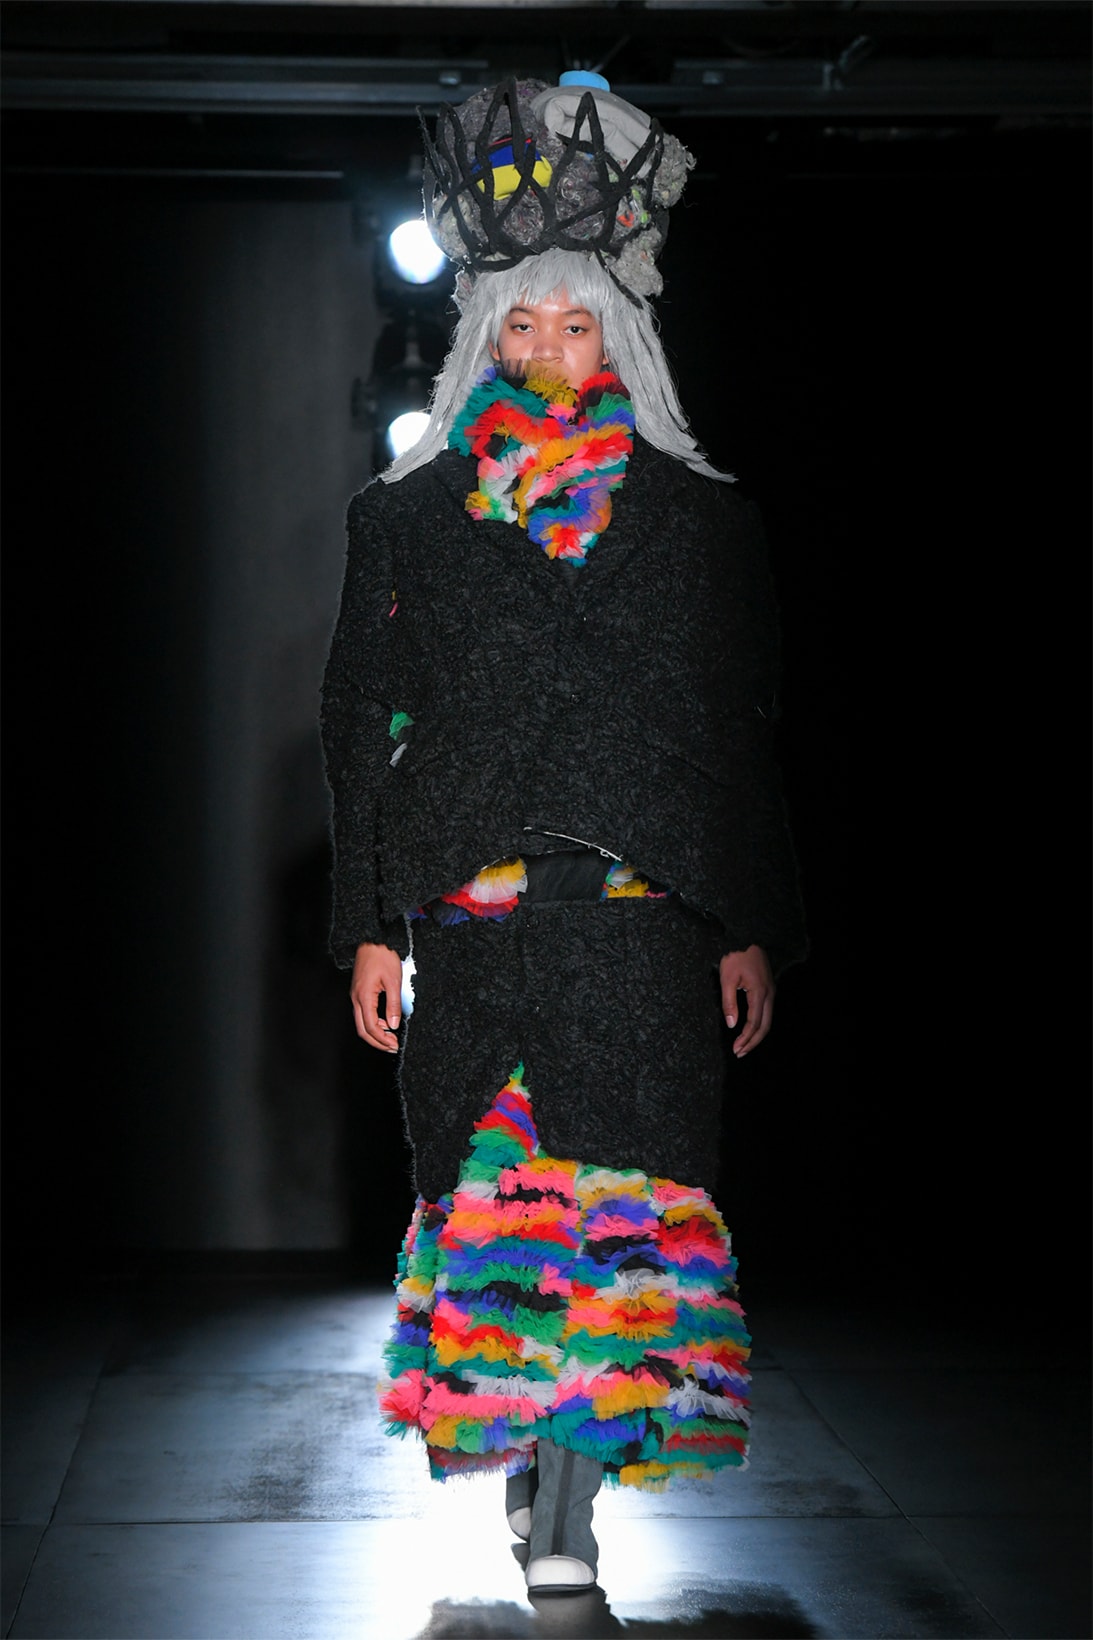 comme des garcons fall winter collection salomon pulsar platform tokyo runway show suit ruffled dress black multicolored